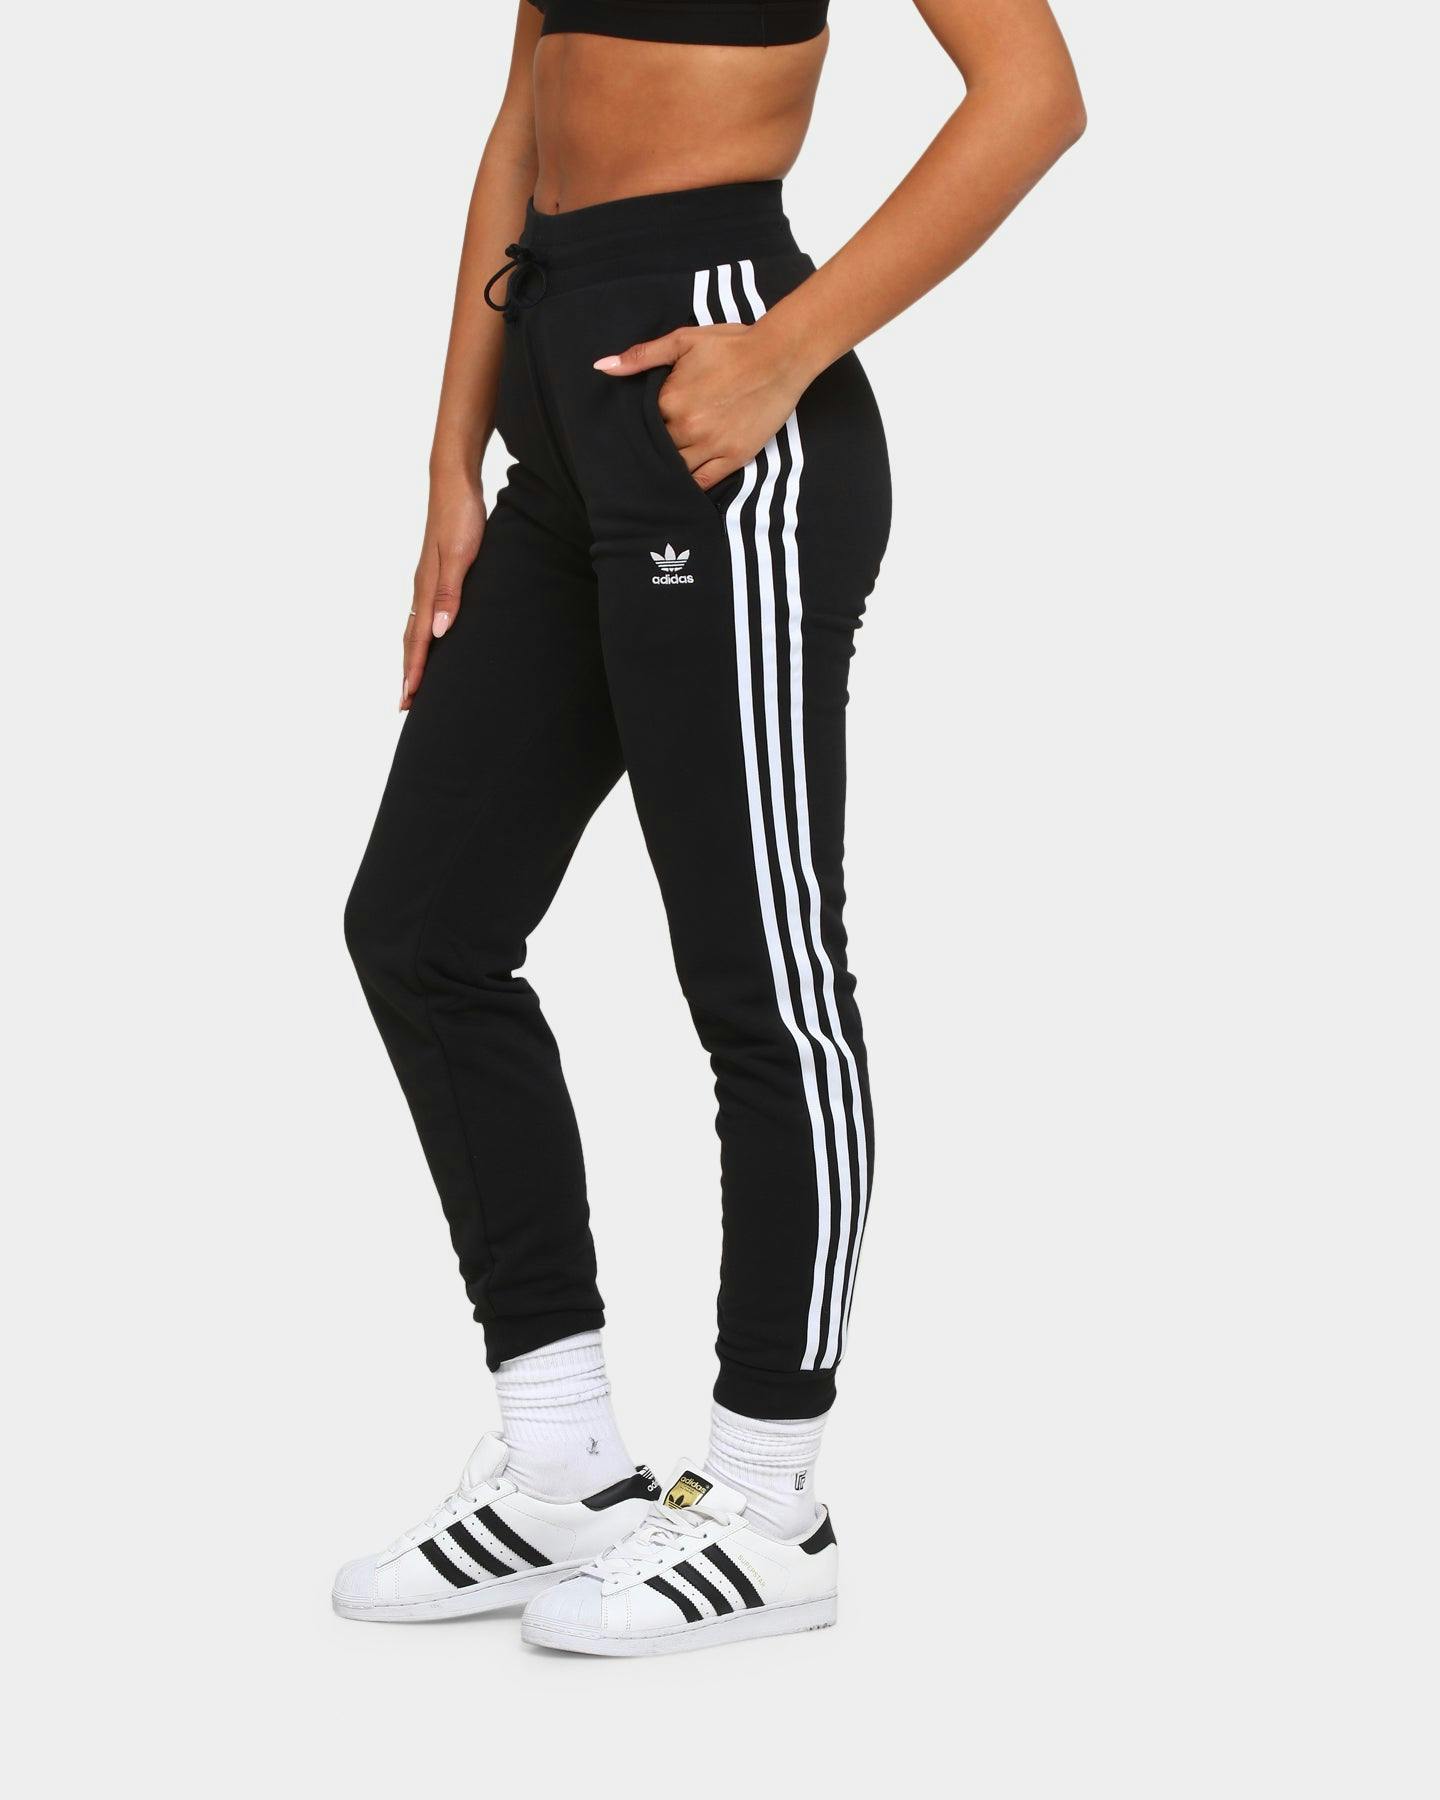 Adidas Women's Slim Pants Black | Culture Kings